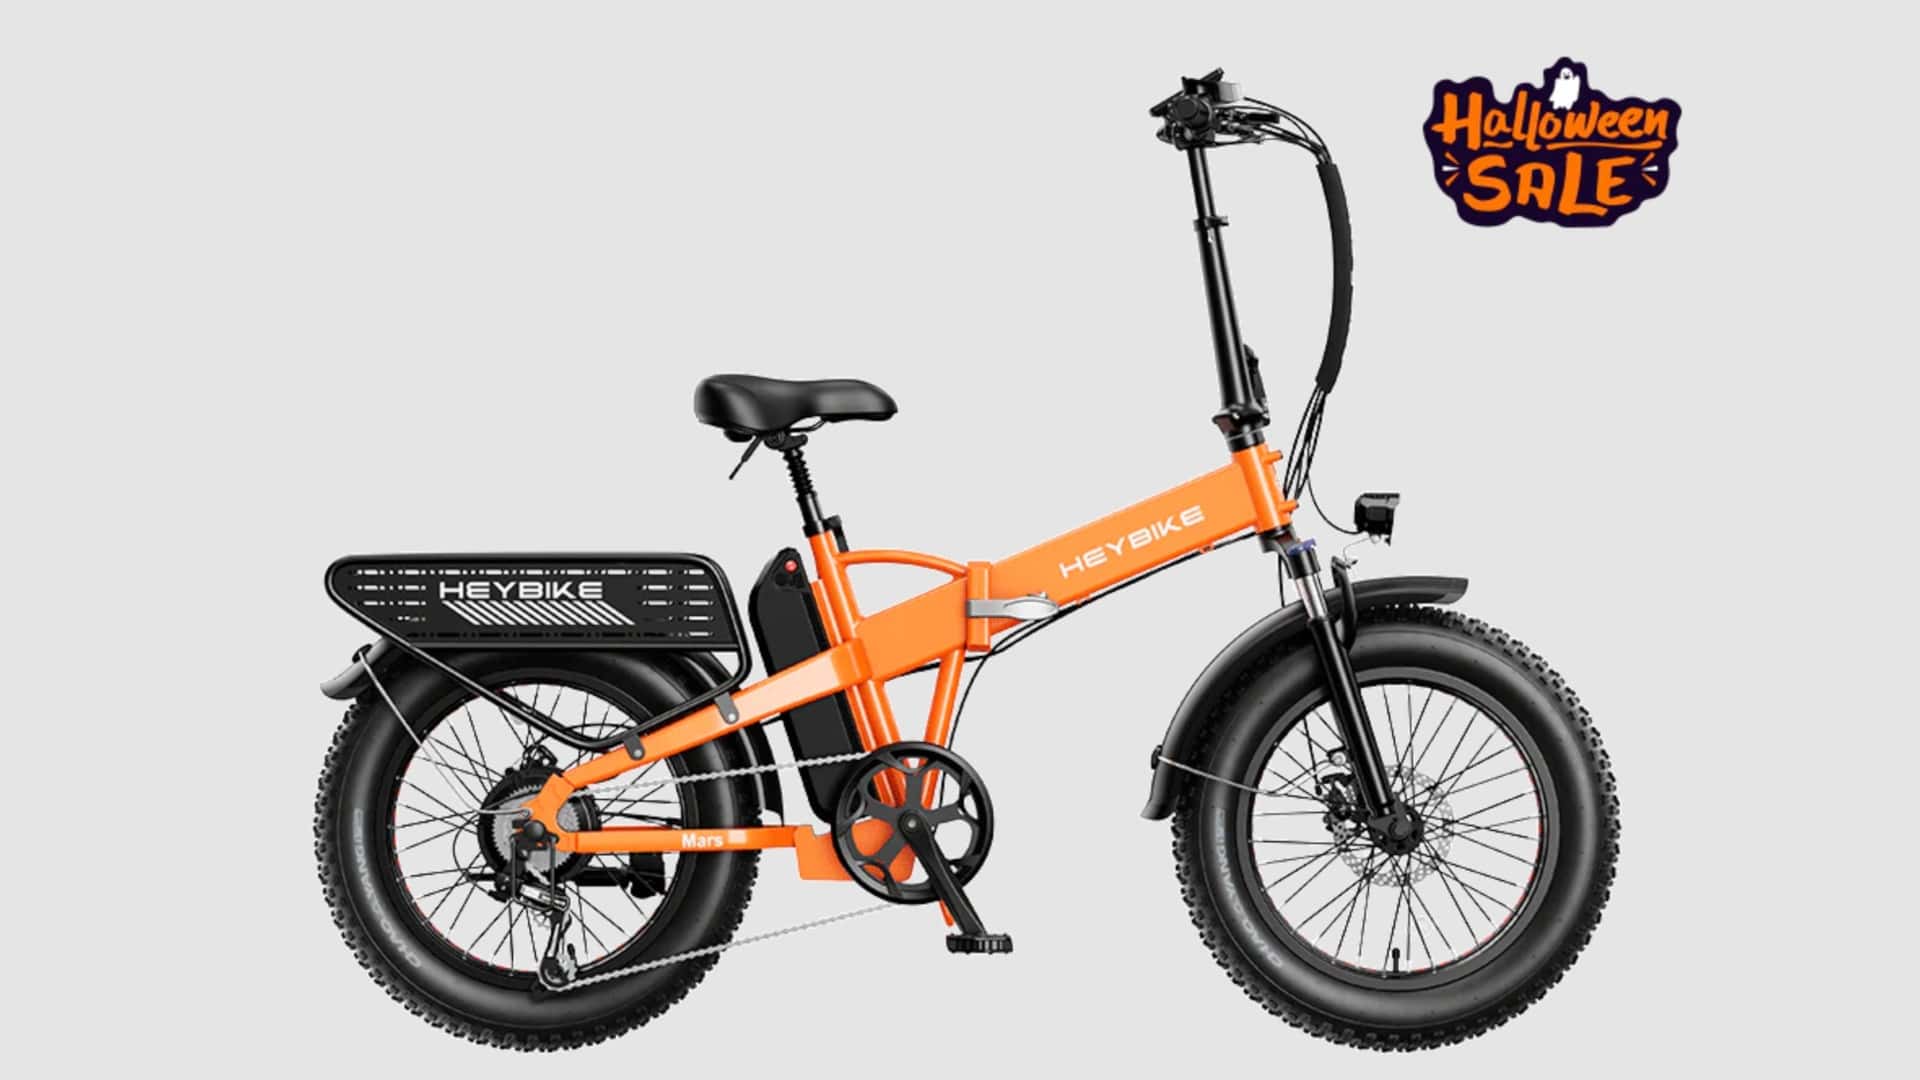 new heybike mars 2.0 promises practicality and go-anywhere fun